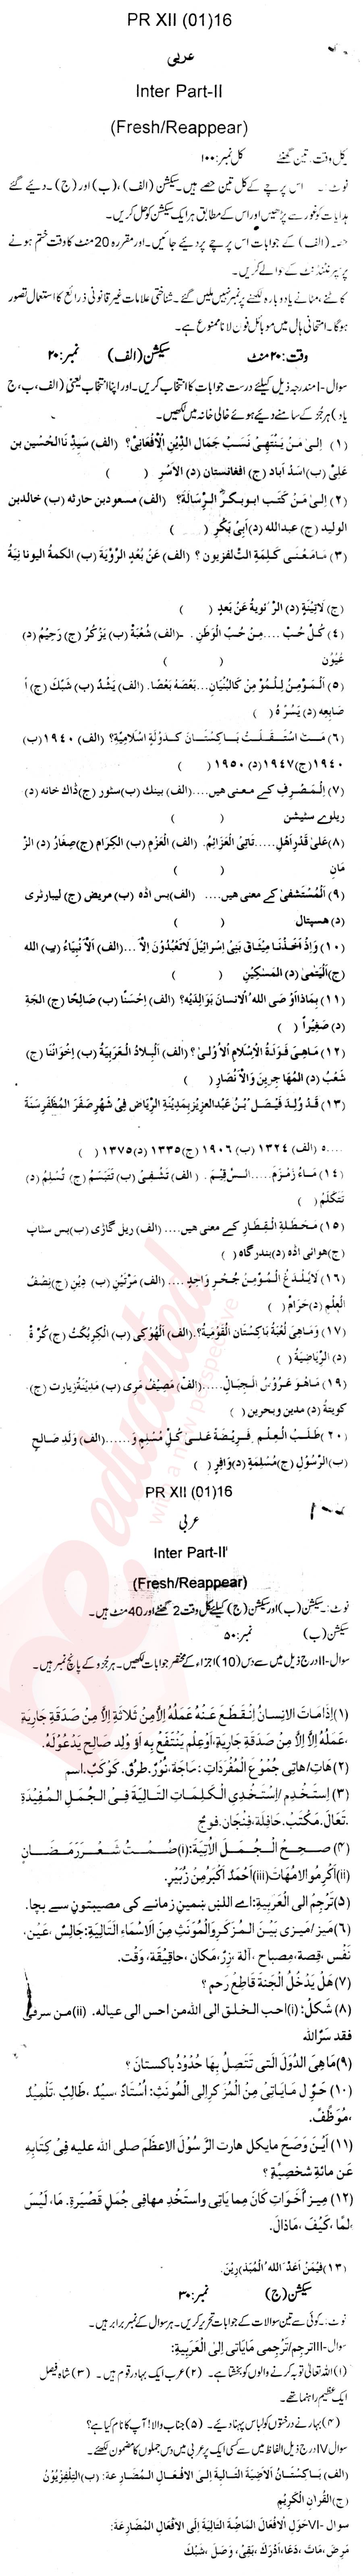 Arabic FA Part 2 Past Paper Group 1 BISE Mardan 2016